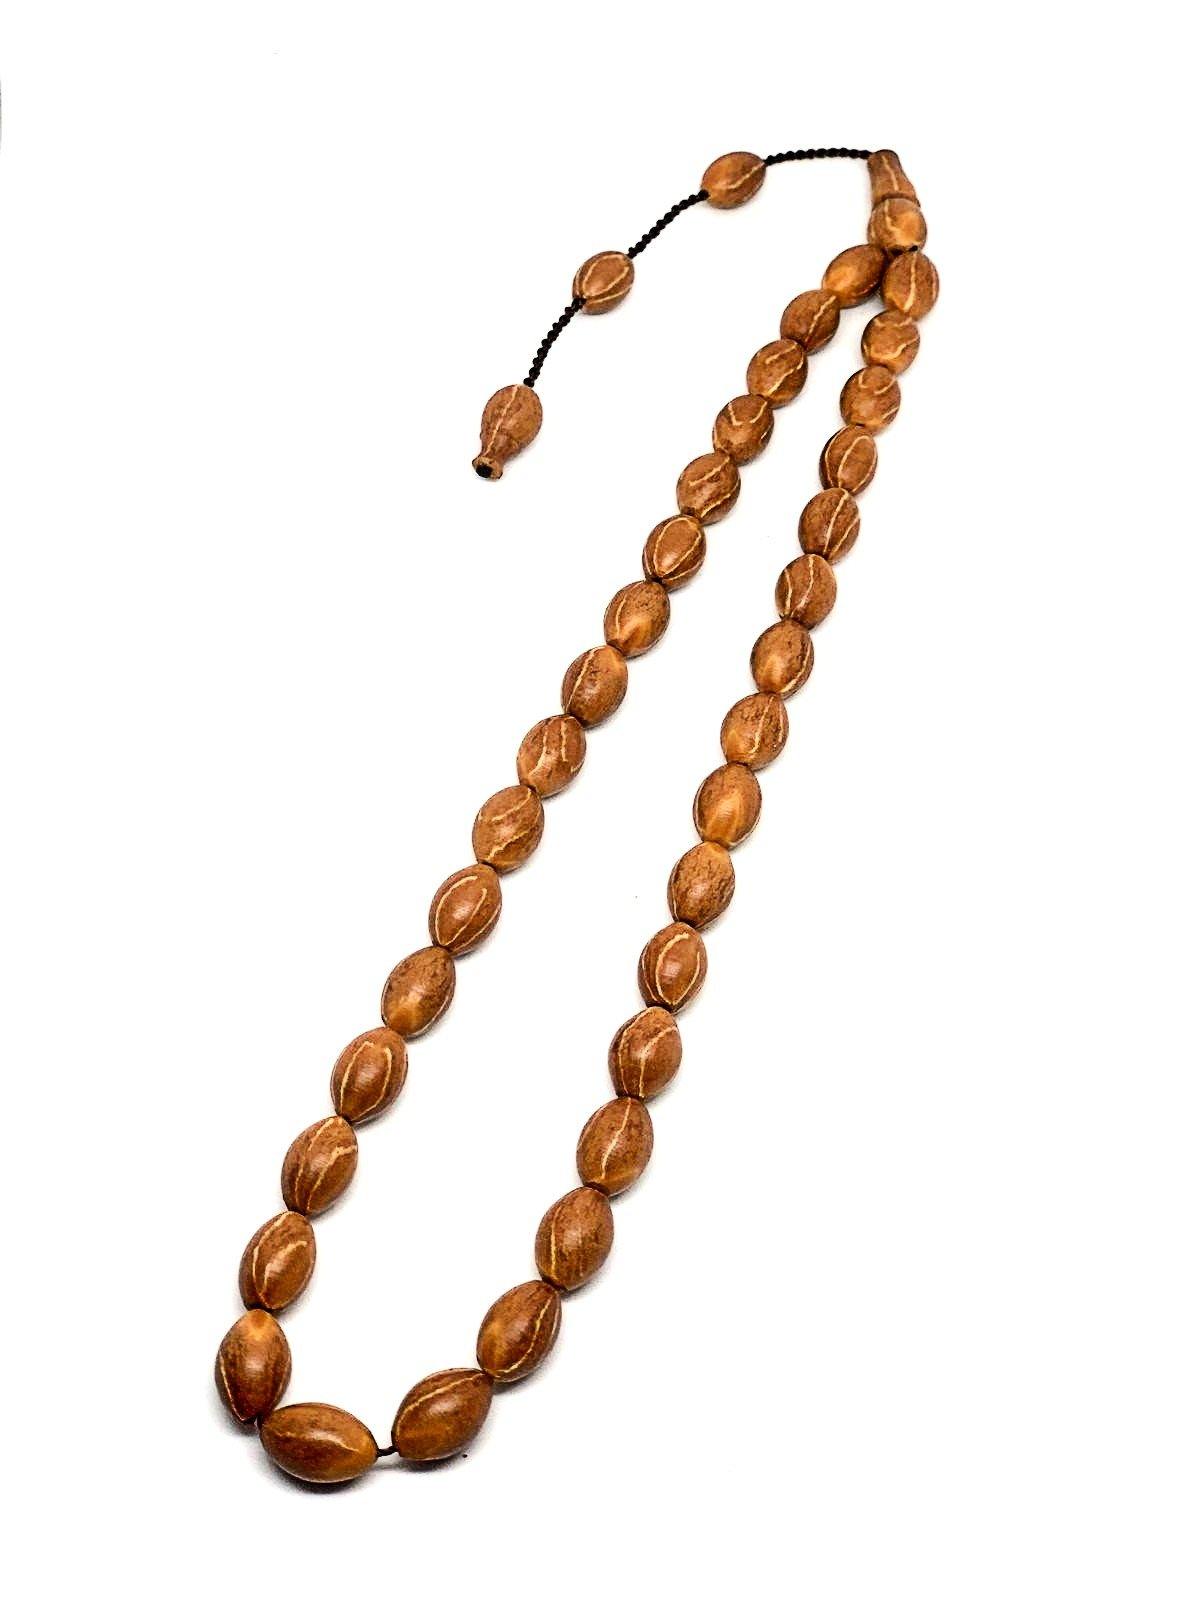 Master Crafted Prayer Beads Tesbih